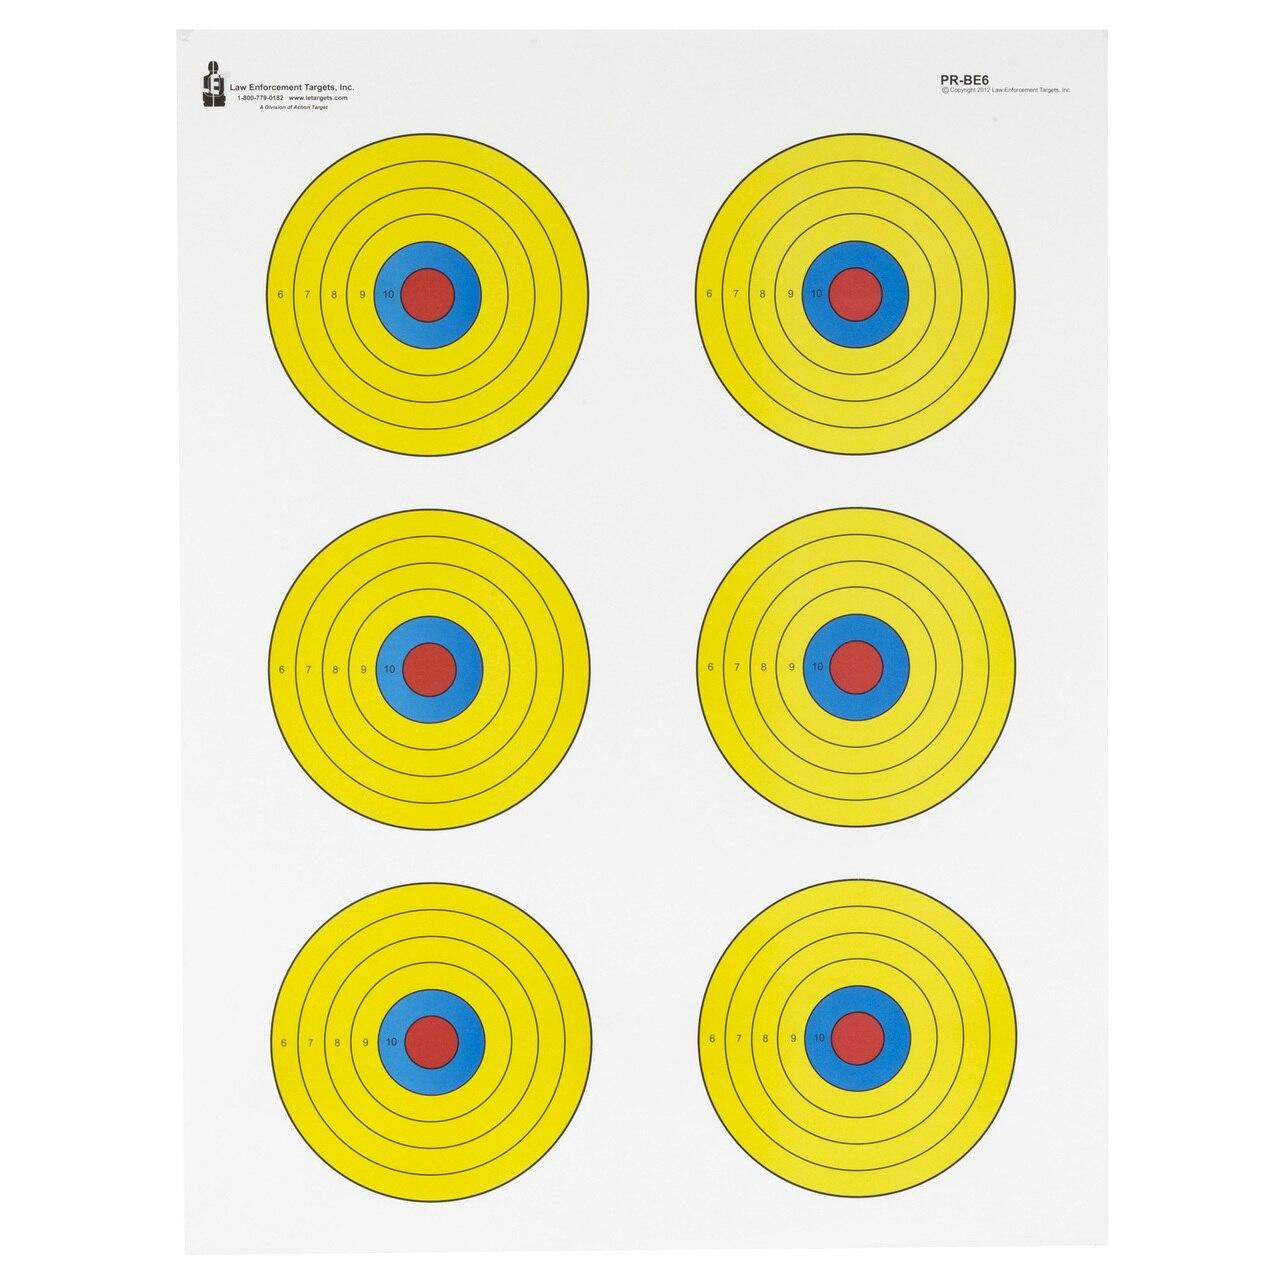 Action Target Action Tgt Bright 6 Bullseye 100pk 816506023760